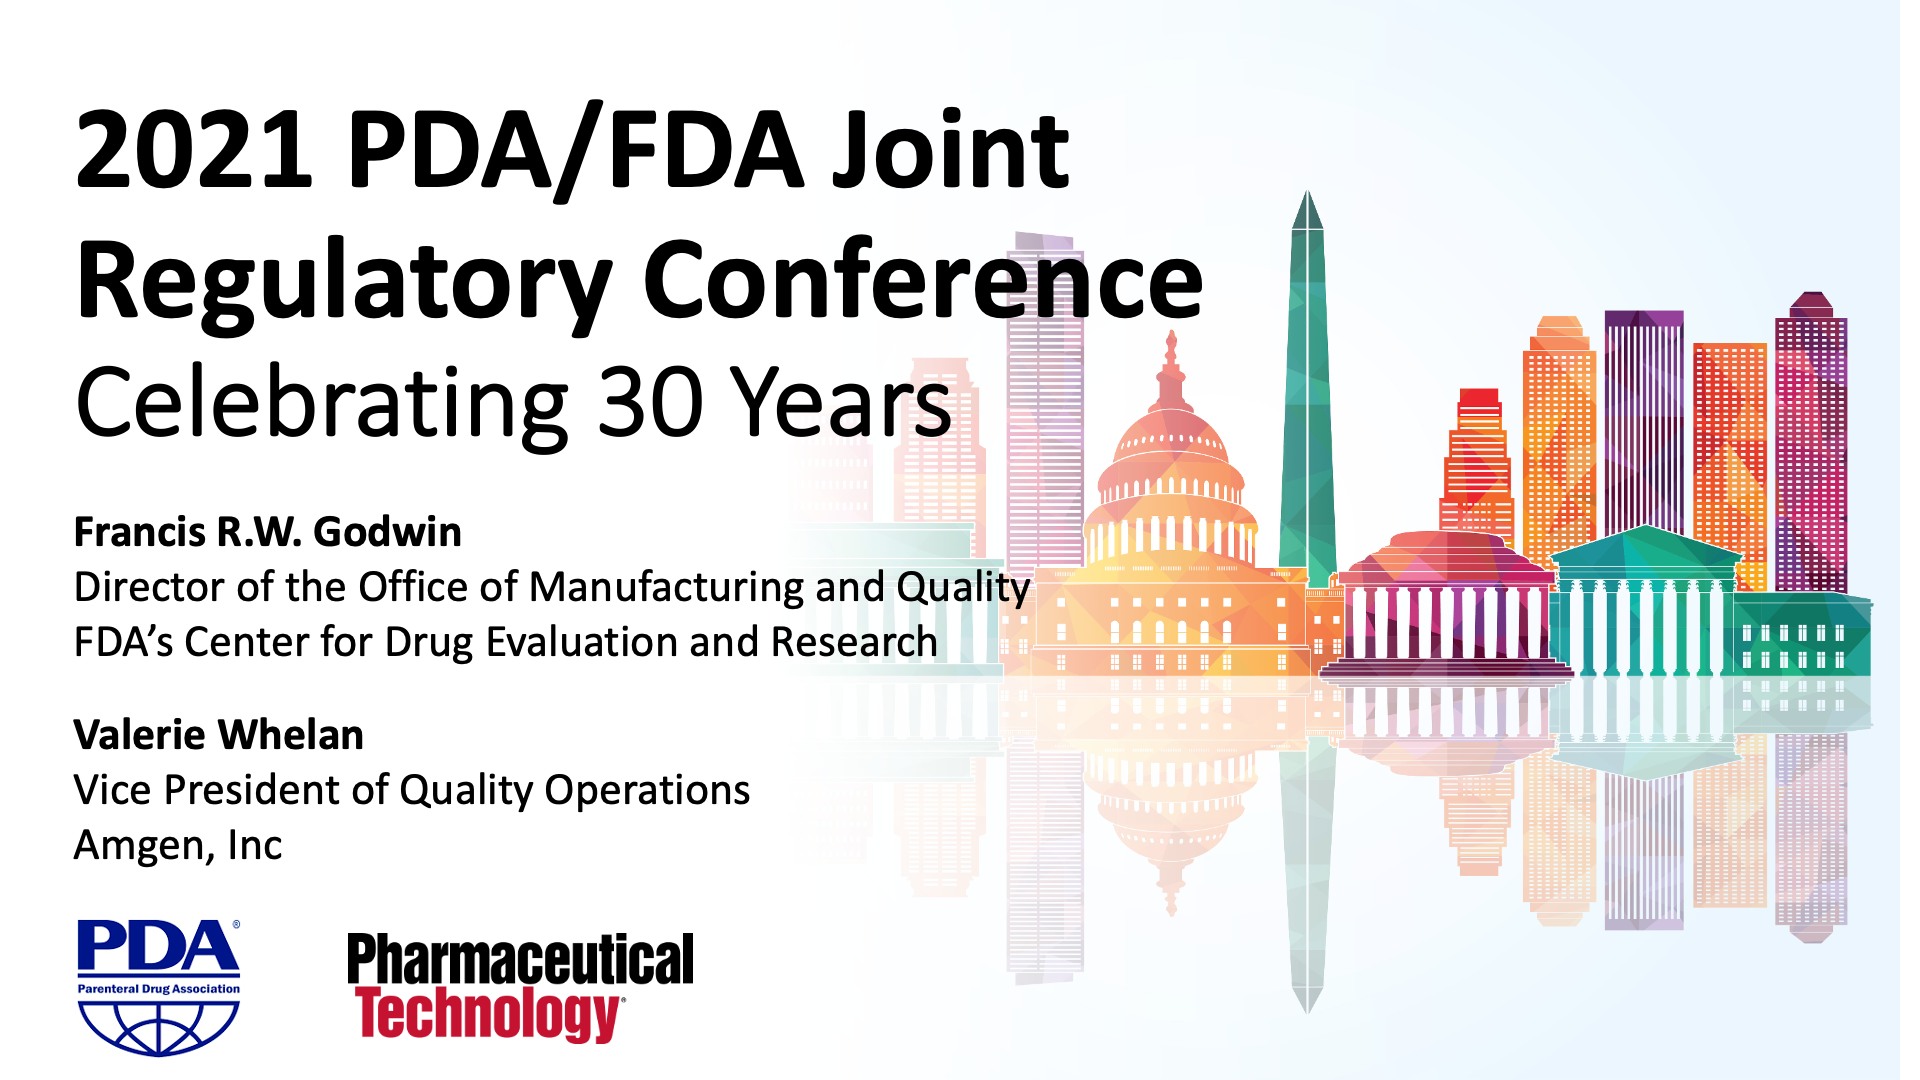 2021 PDA/FDA Joint Regulatory Conference Celebrating 30 Years